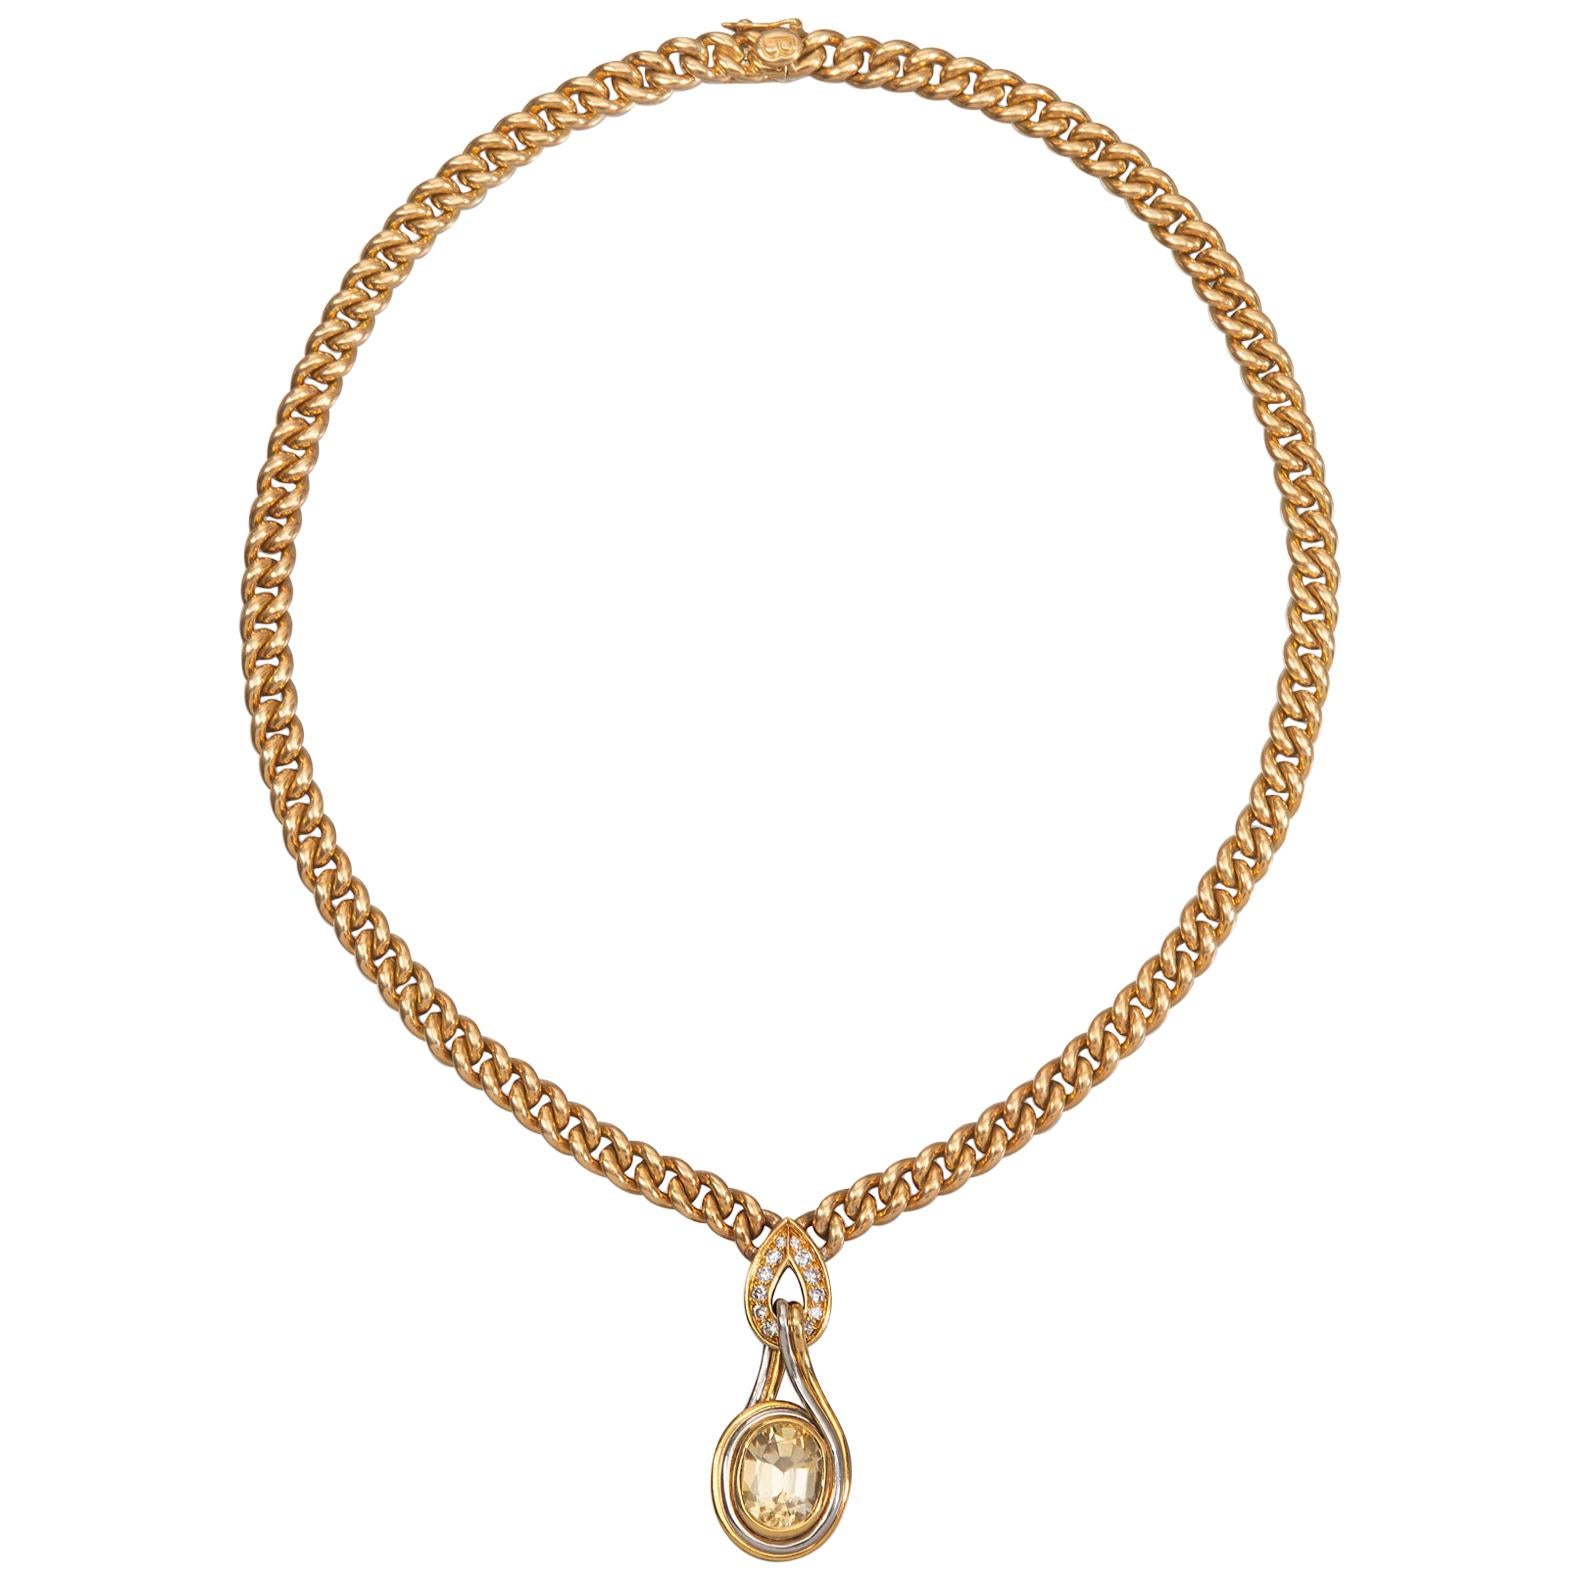 Bulgari Untreated 7.6 Carat Sapphire and Diamond 18 Carat Gold Necklace